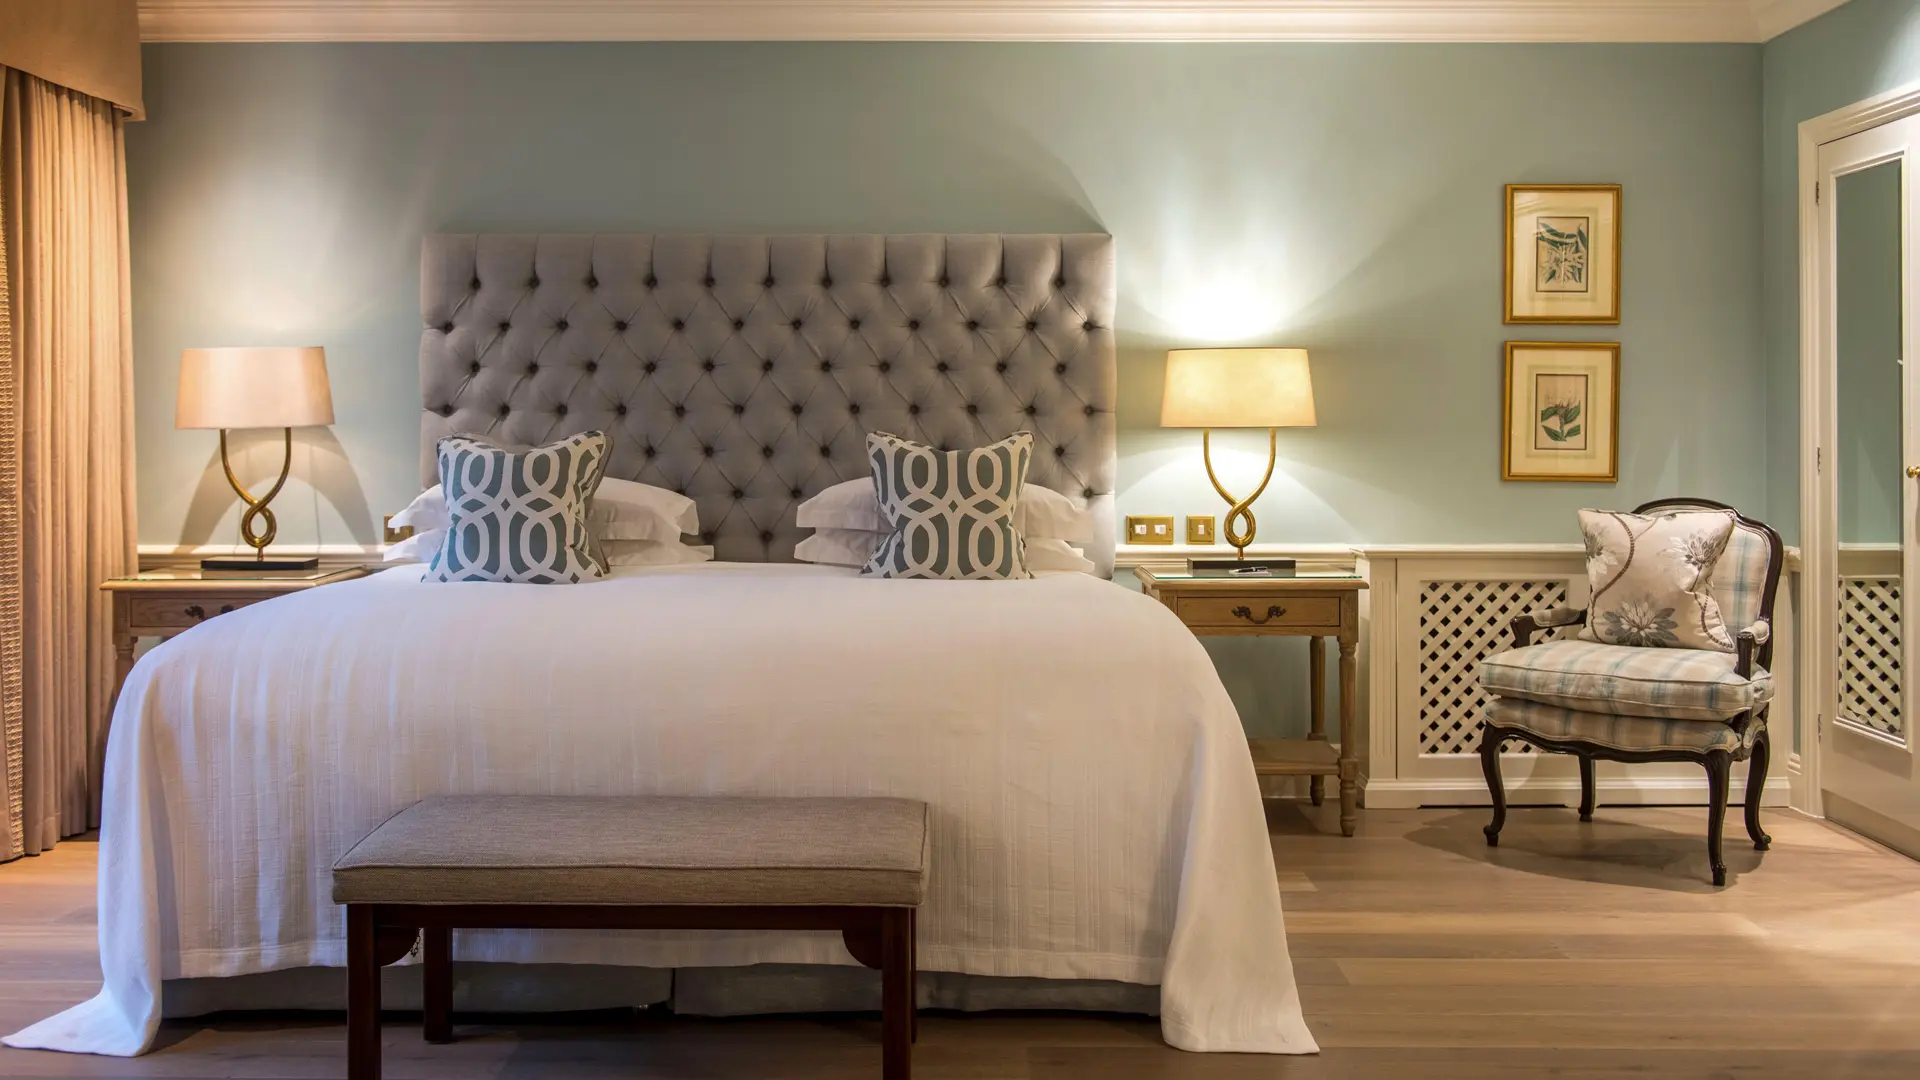 Hotel review Accommodation' - Chewton Glen Hotel - 6